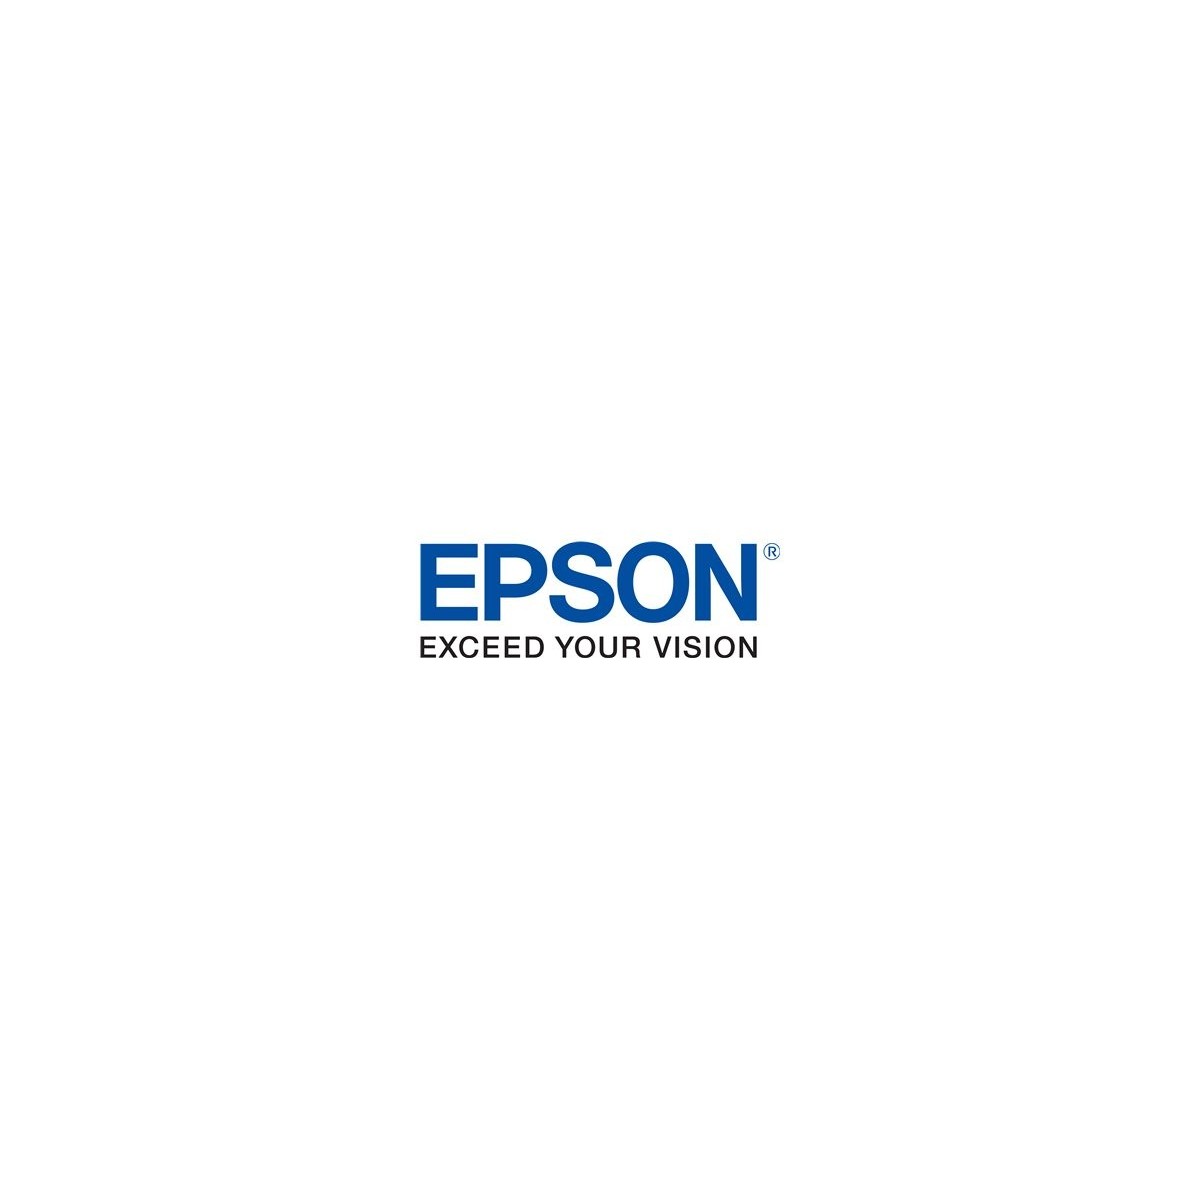 Epson 250 SHEET PAPER CASSETTE - 250 sheets - Plain